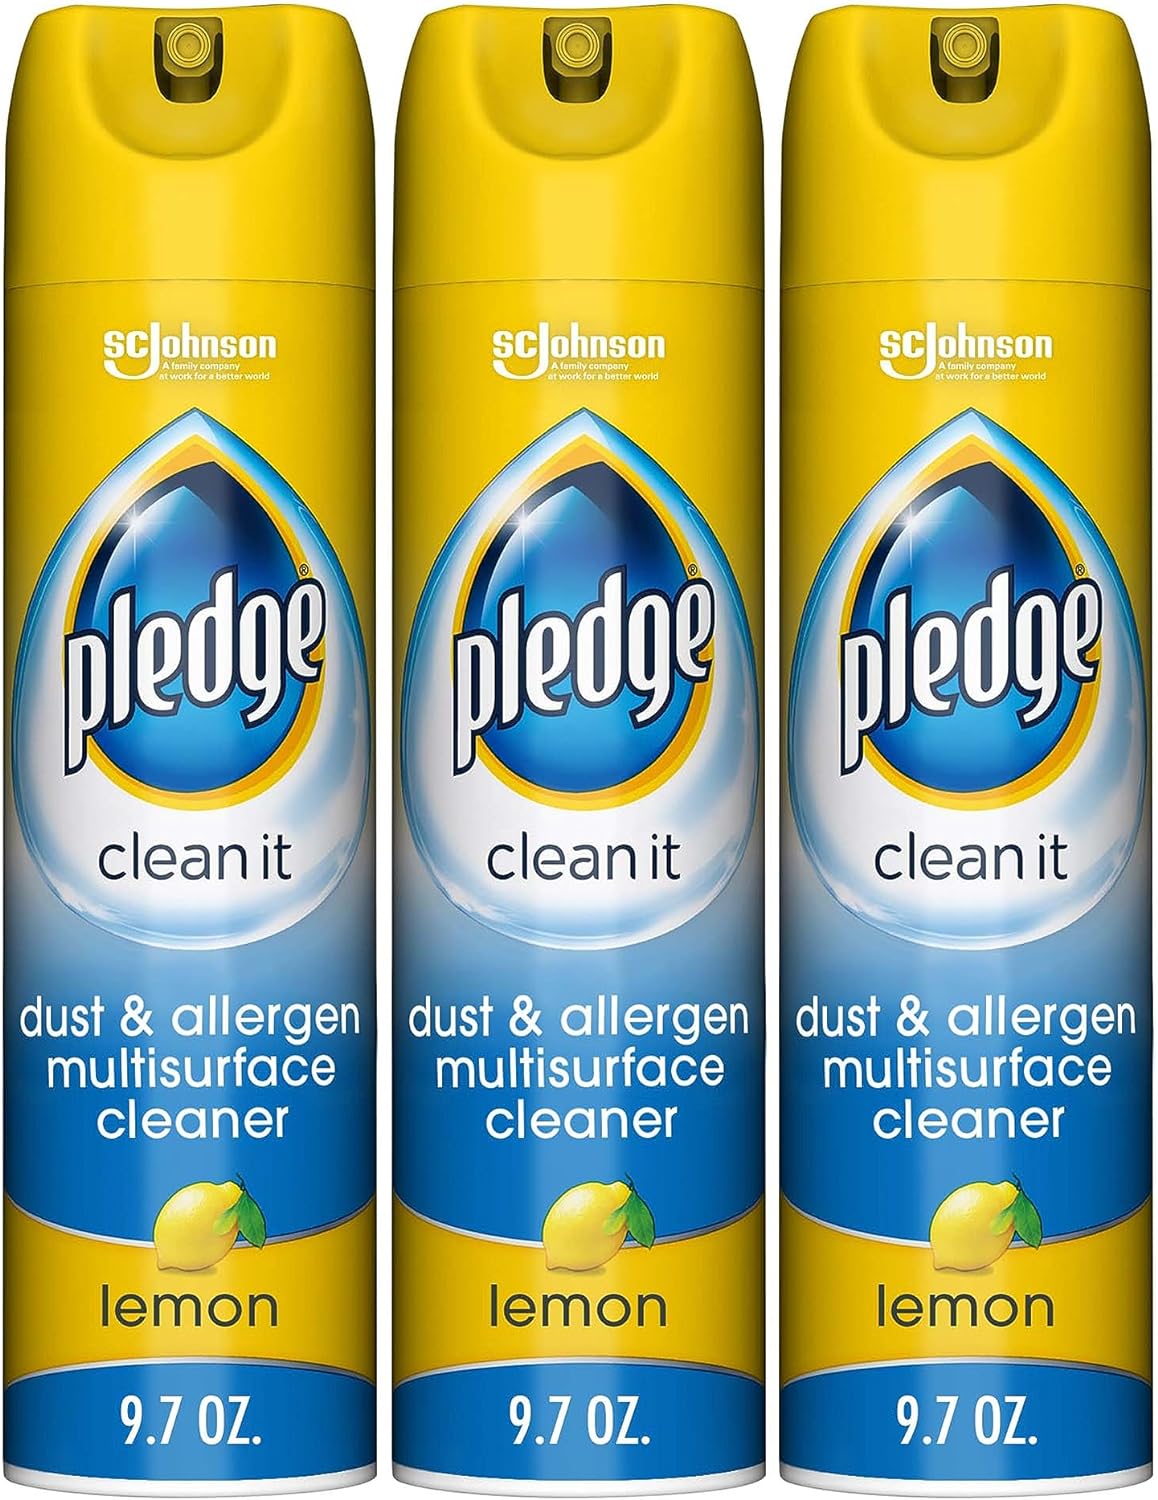 Pledge Dust & Allergen Multisurface Cleaner Spray, Works on Leather, Granite, Wood, and Stainless Steel, Multipurpose Cleaner, Lemon, 9.7 Oz, Pack of 3